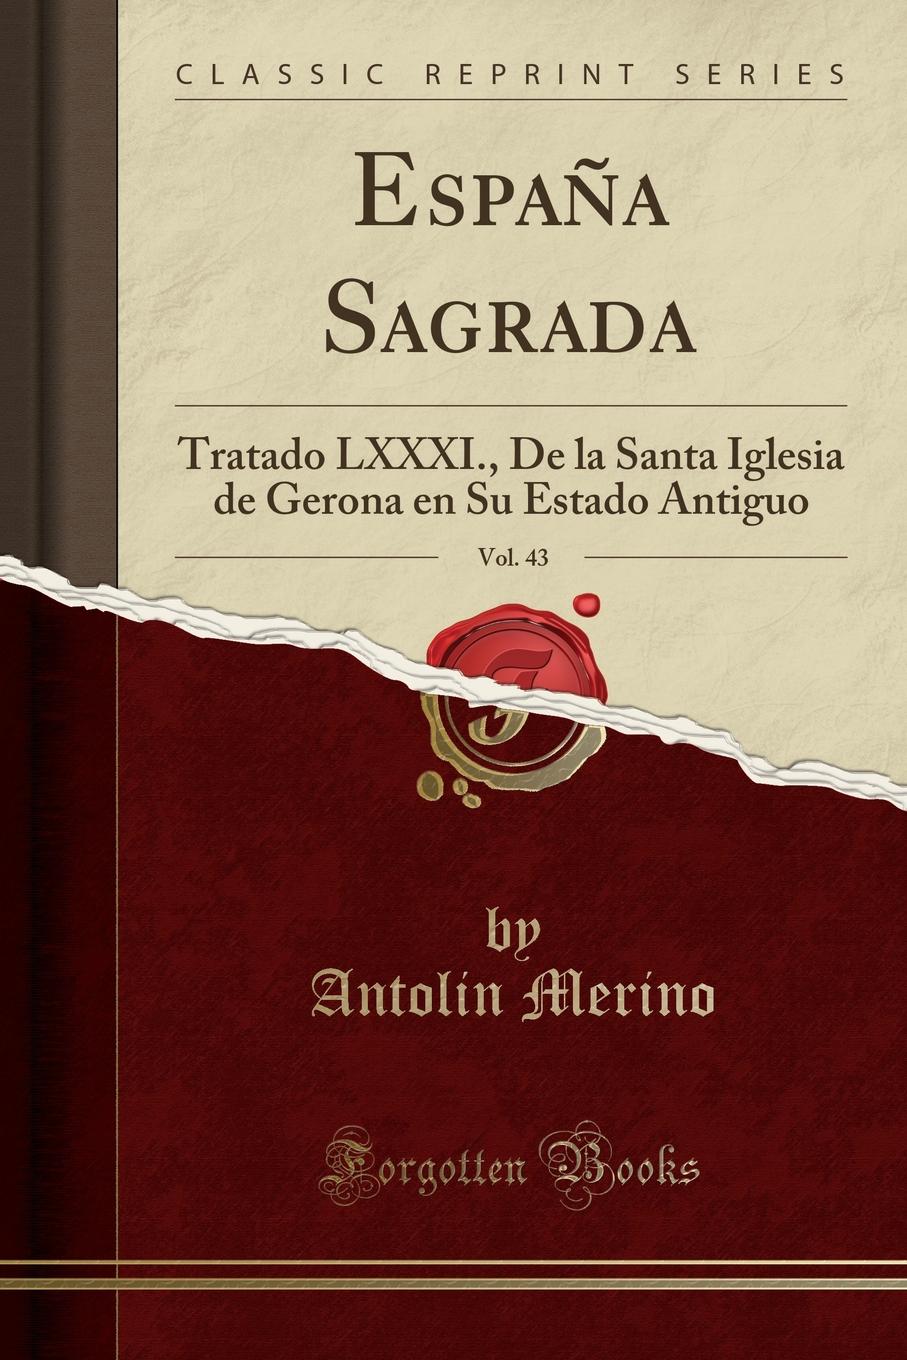 Espana Sagrada, Vol. 43. Tratado LXXXI., De la Santa Iglesia de Gerona en Su Estado Antiguo (Classic Reprint)